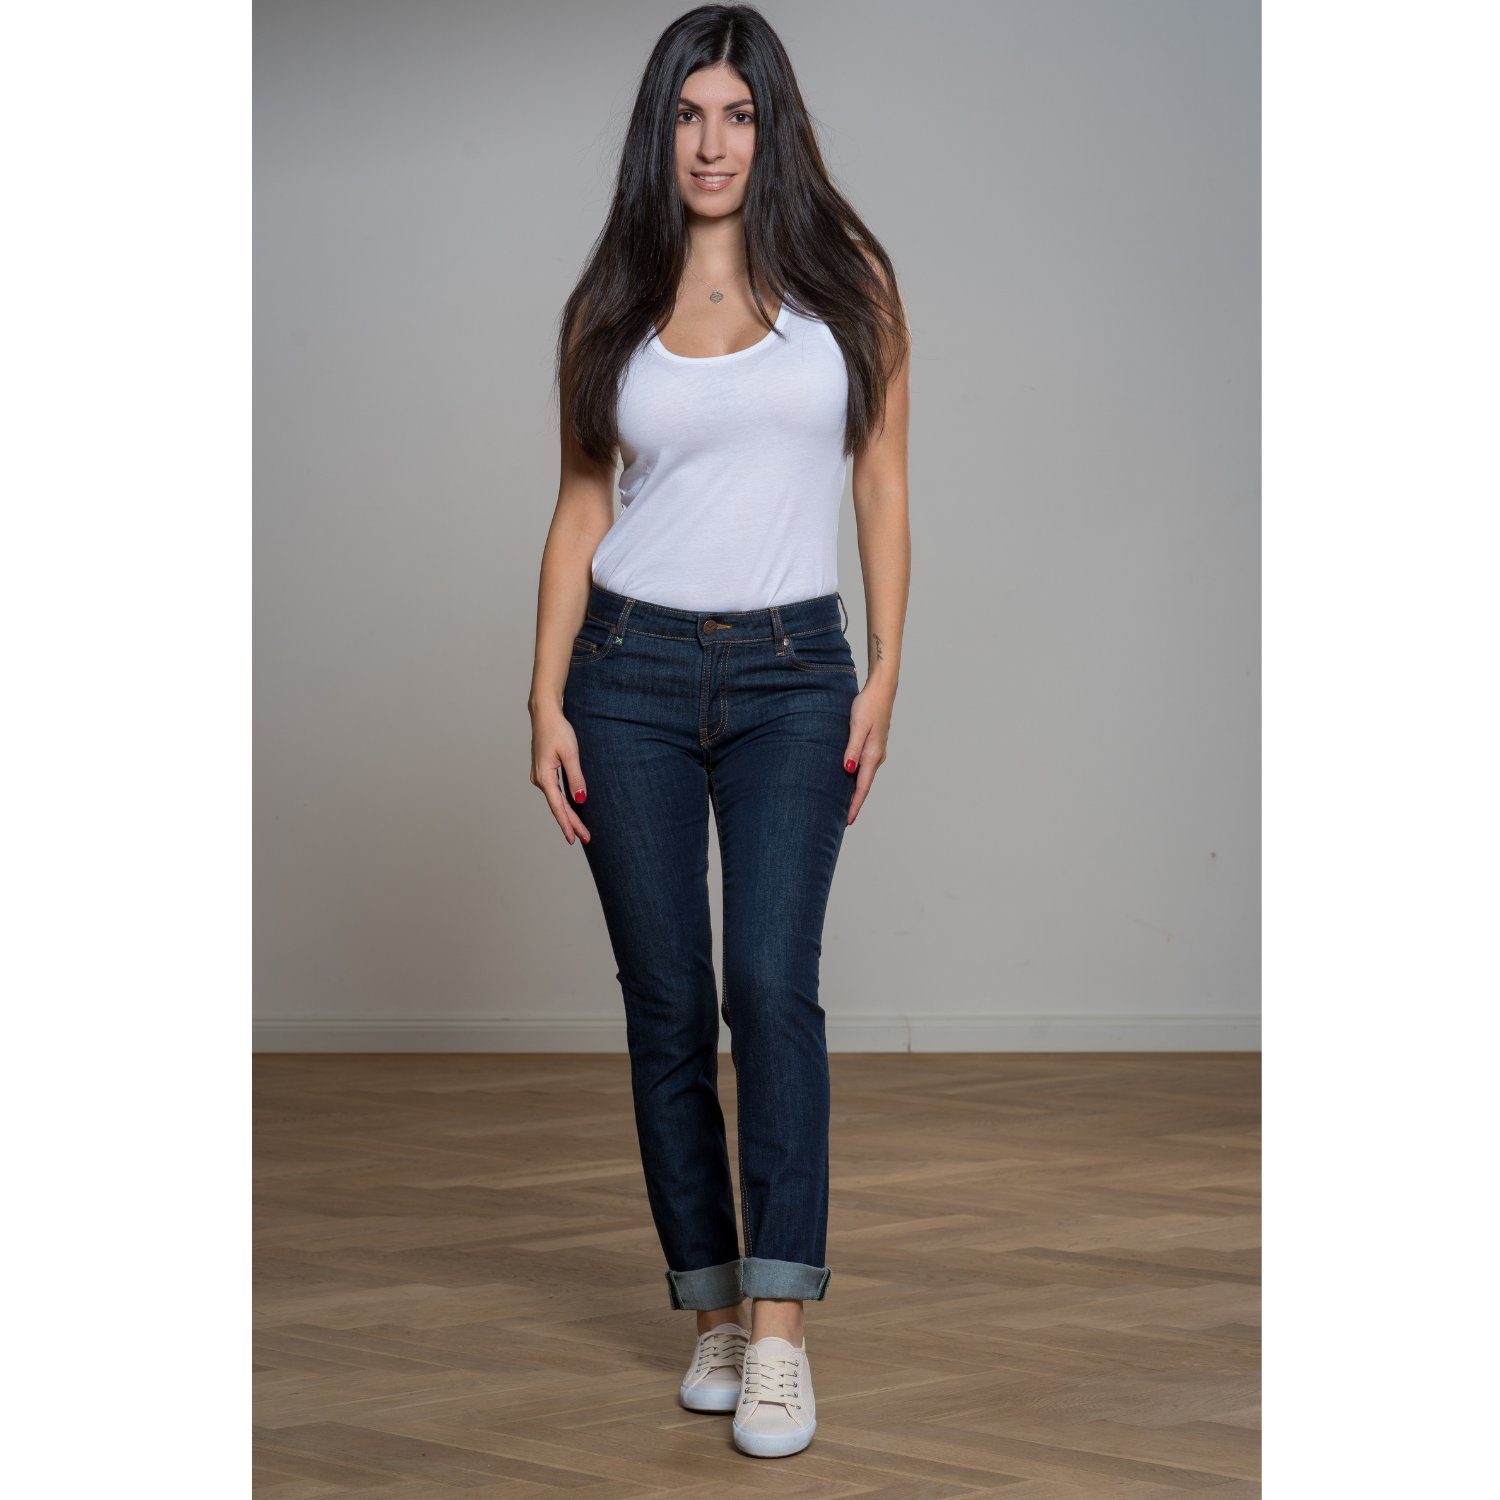 Feuervogl 5-Pocket-Jeans fv-Sve:nja, Slim Fit, Medium Waist, Damenjeans 5-Pocket-Style, Medium Waist, Slim Fit Classic Blue